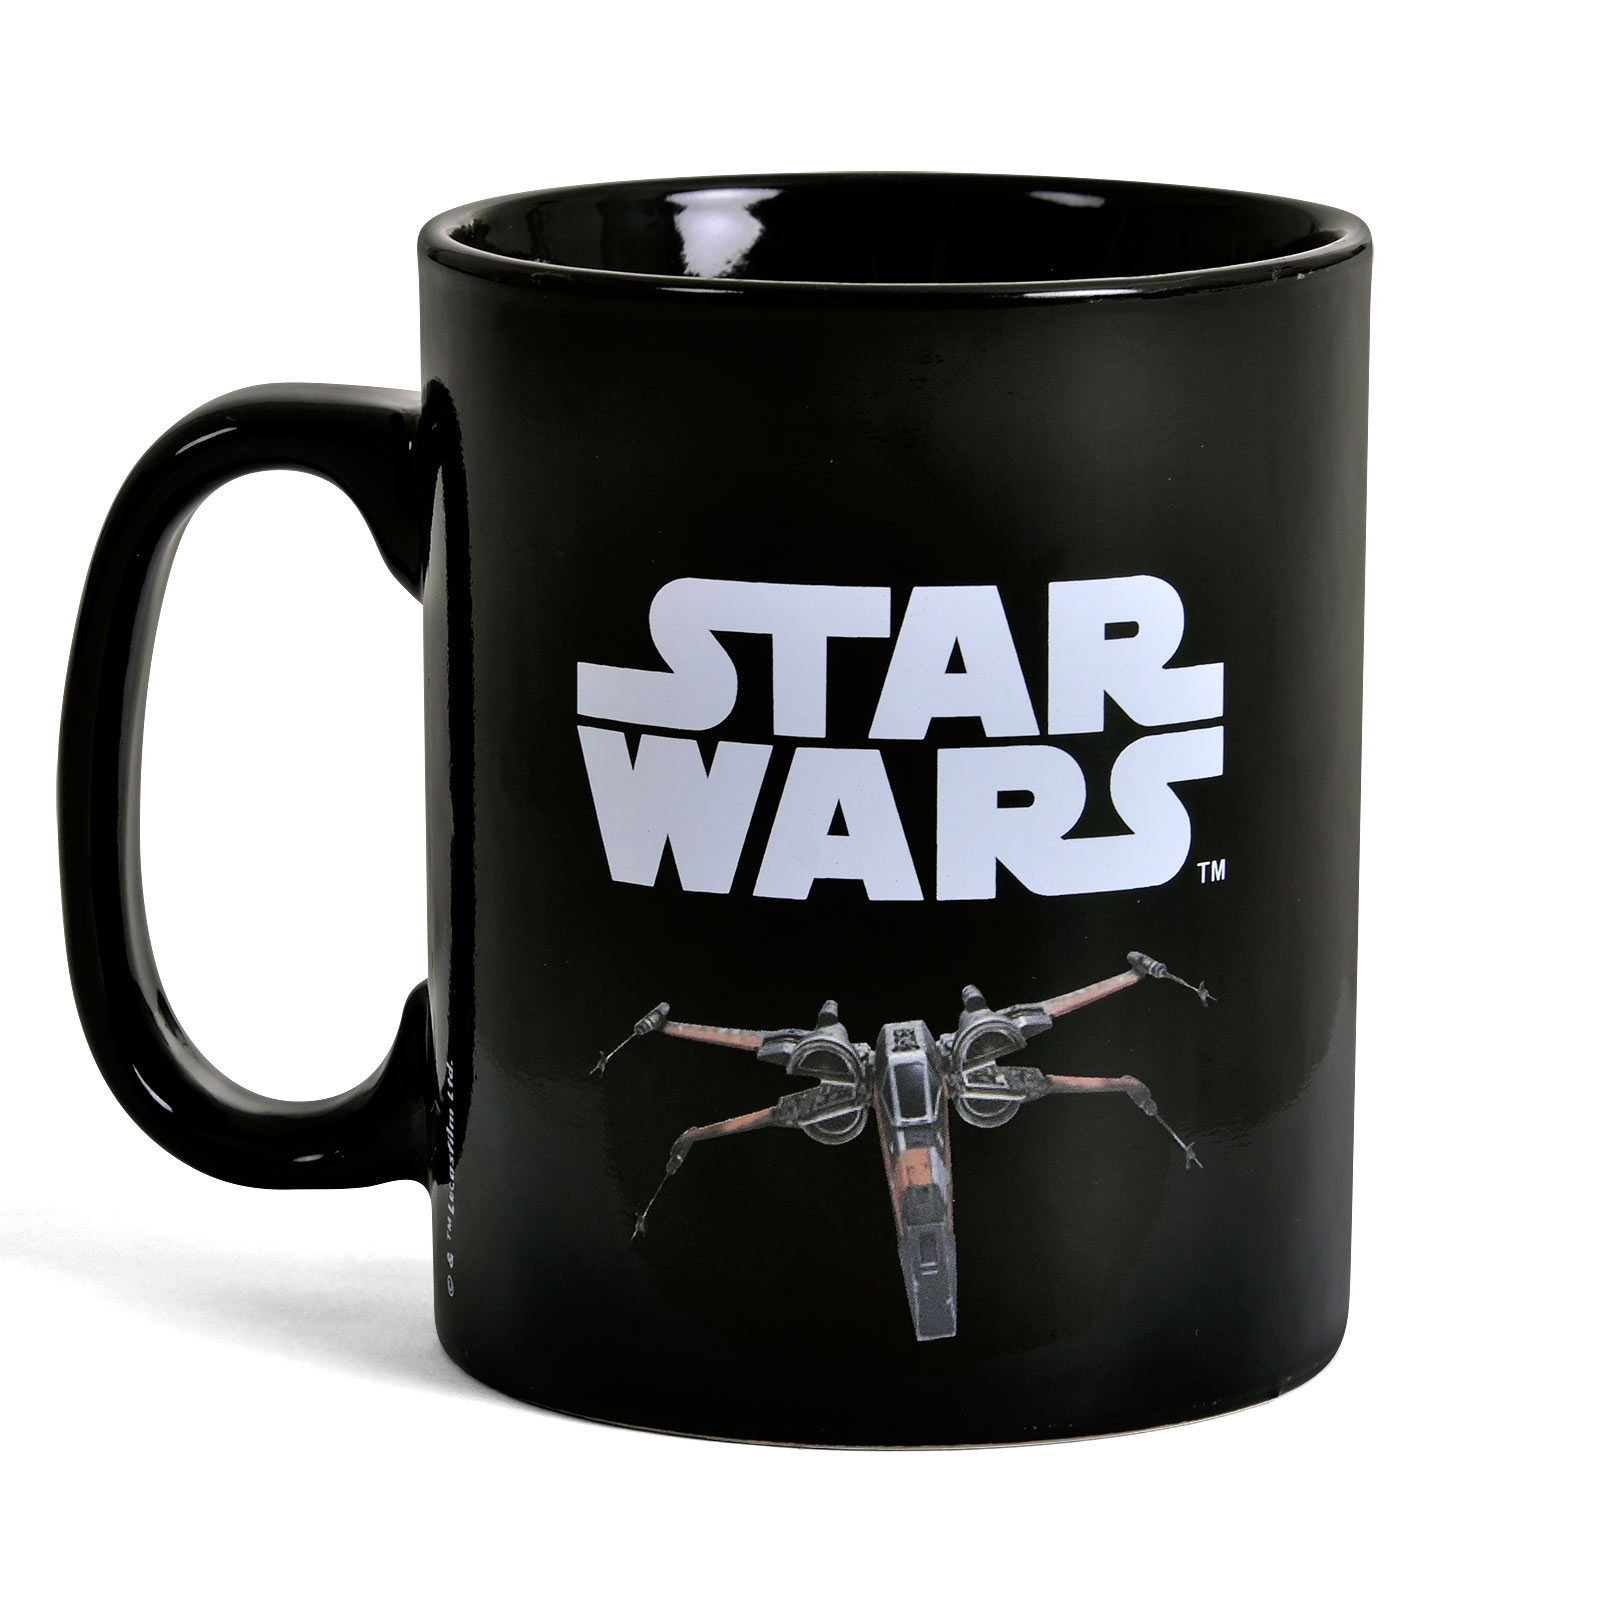 Star Wars - Space Battle Thermal Effect Mug